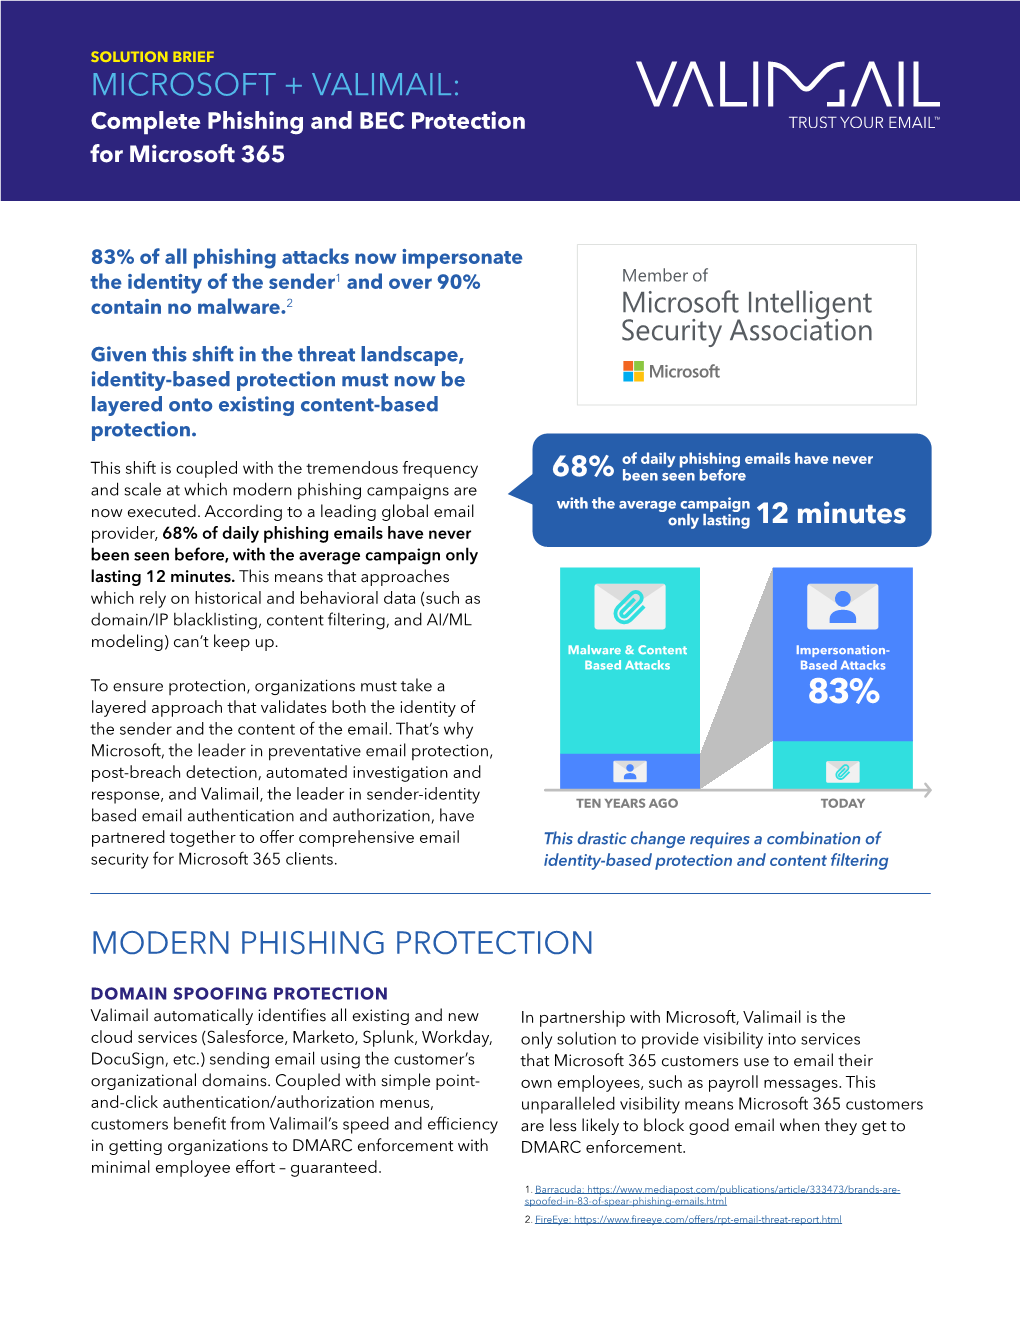 Microsoft + Valimail: Modern Phishing Protection